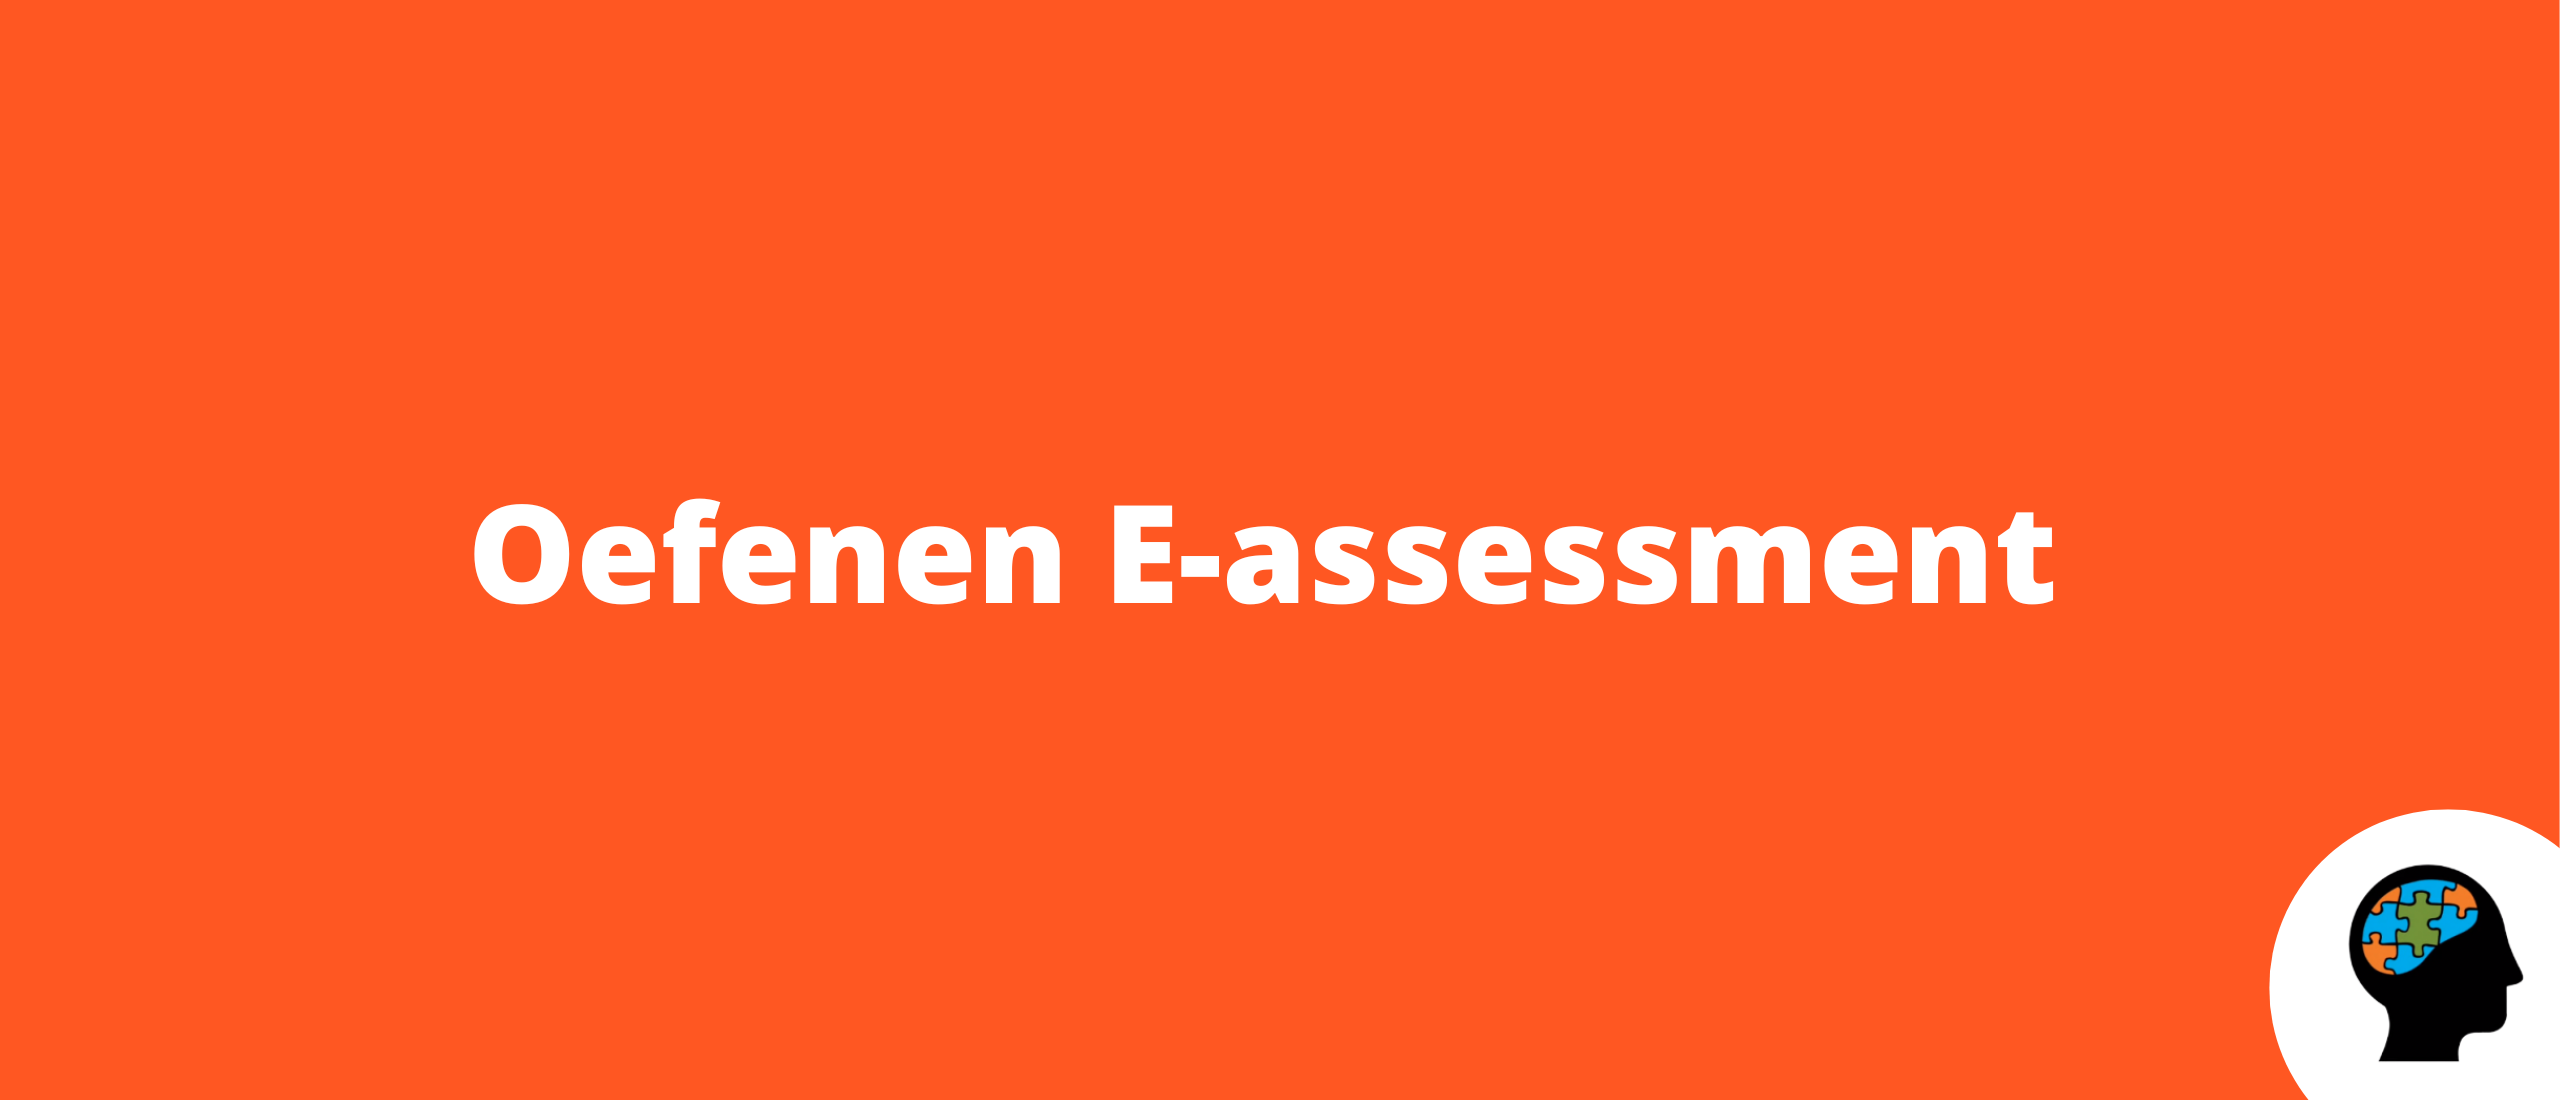 oefenen E-assessment